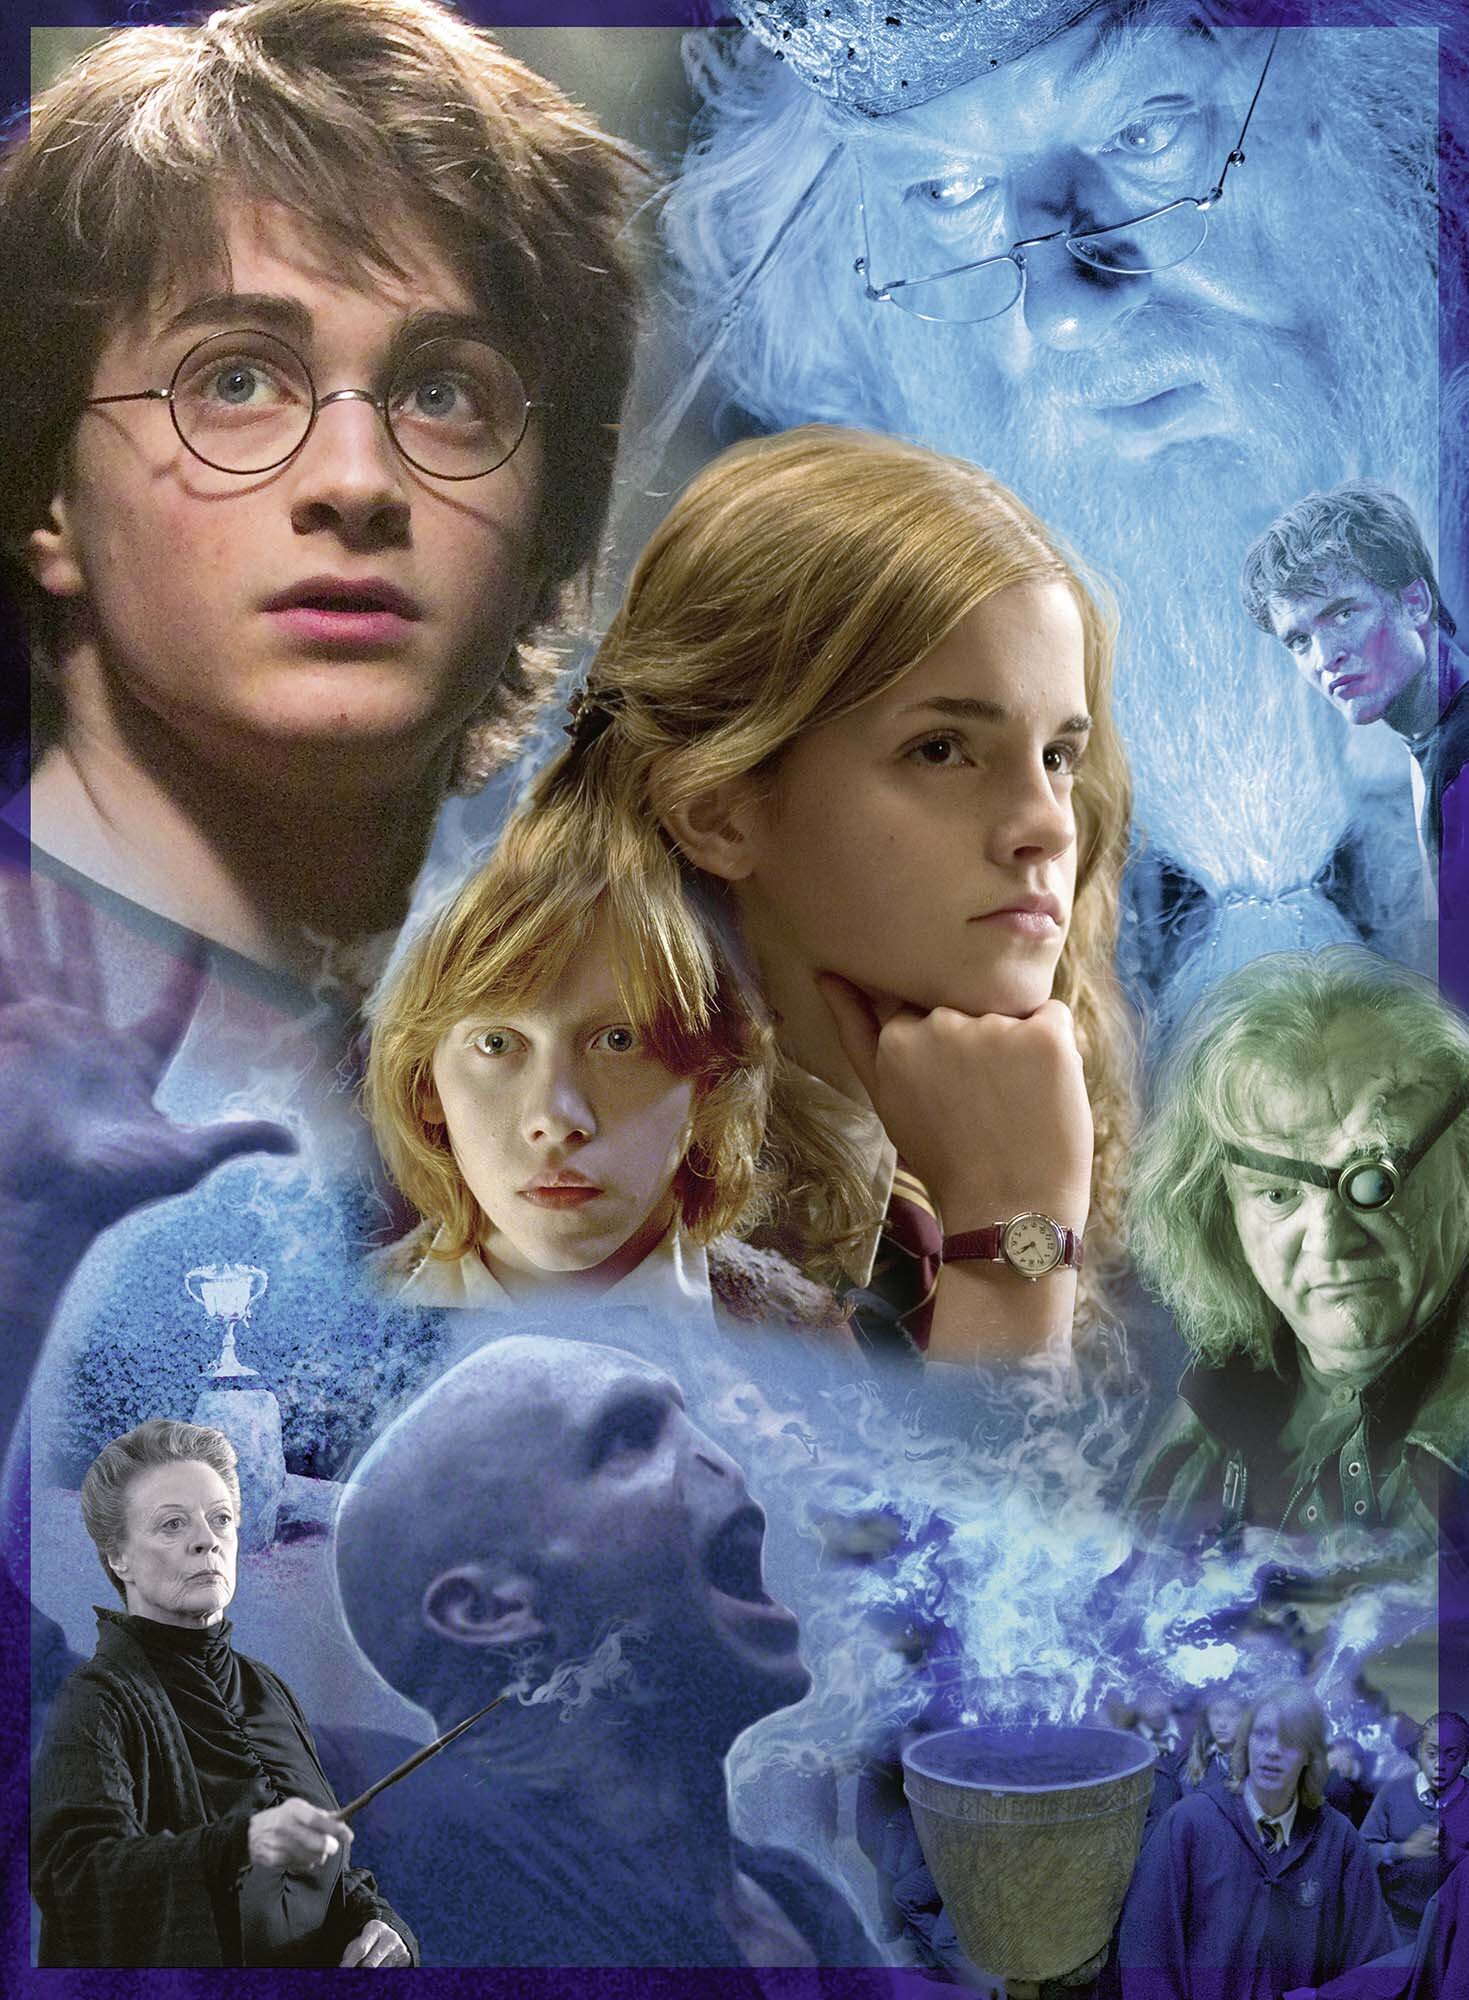 Ravensburger Puzzel - Harry Potter op Hogwarts 500 stukjes